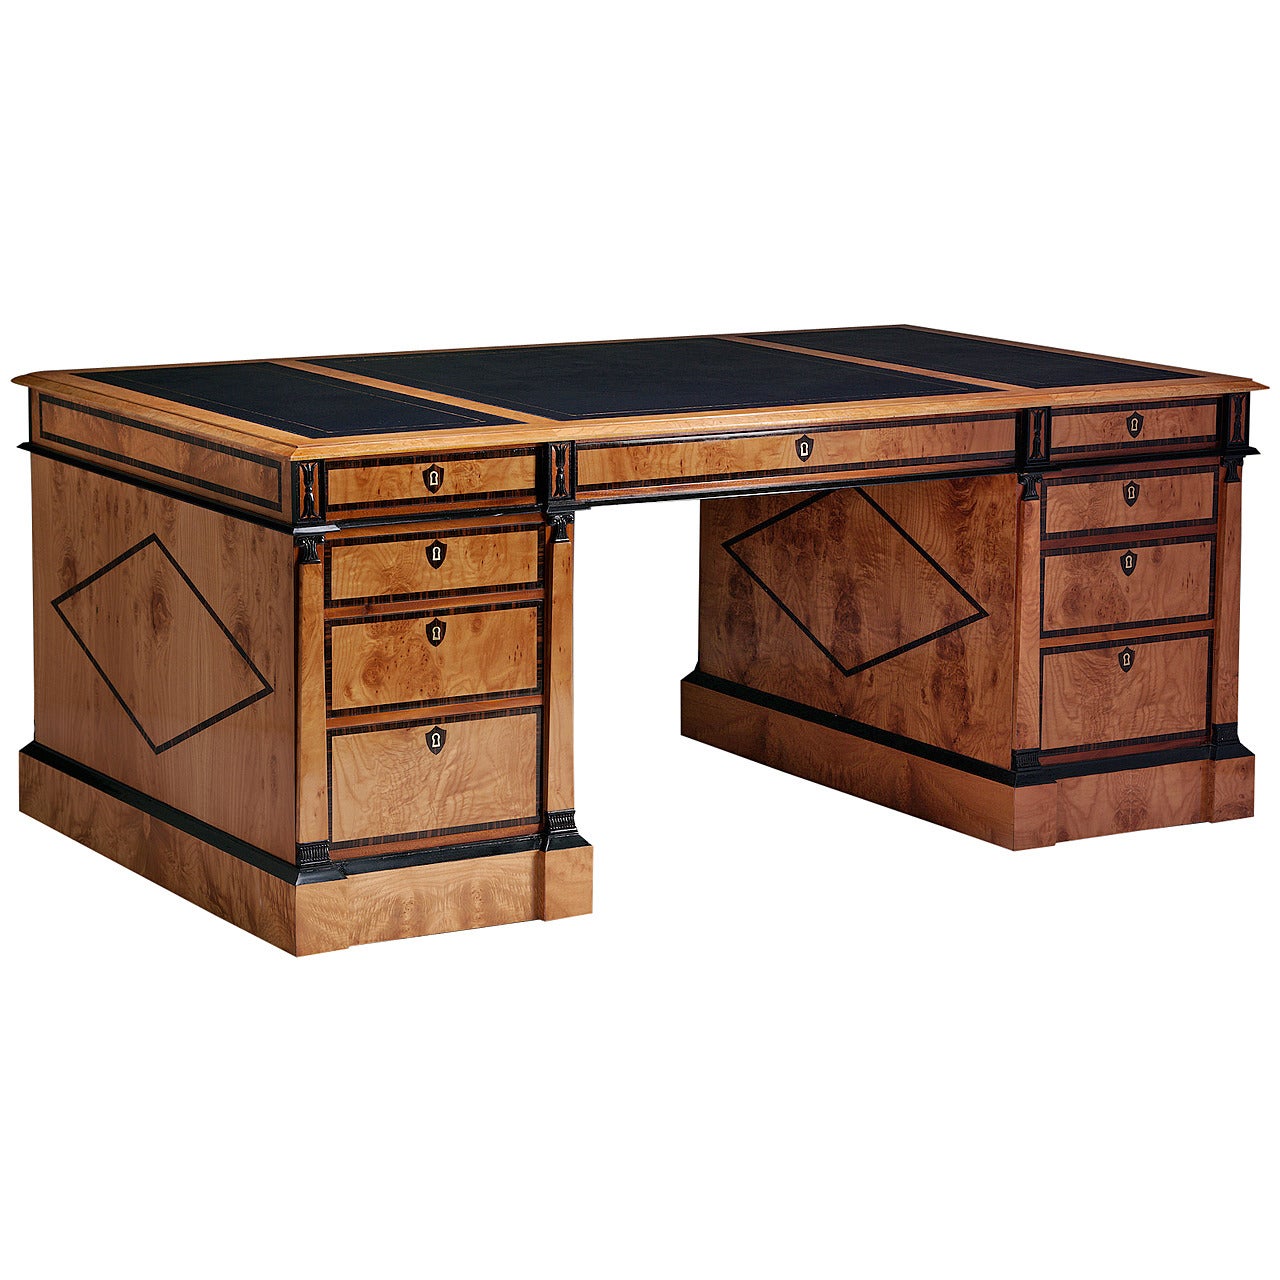 Beidermier Design Partners Desk of Handsome Proportions For Sale